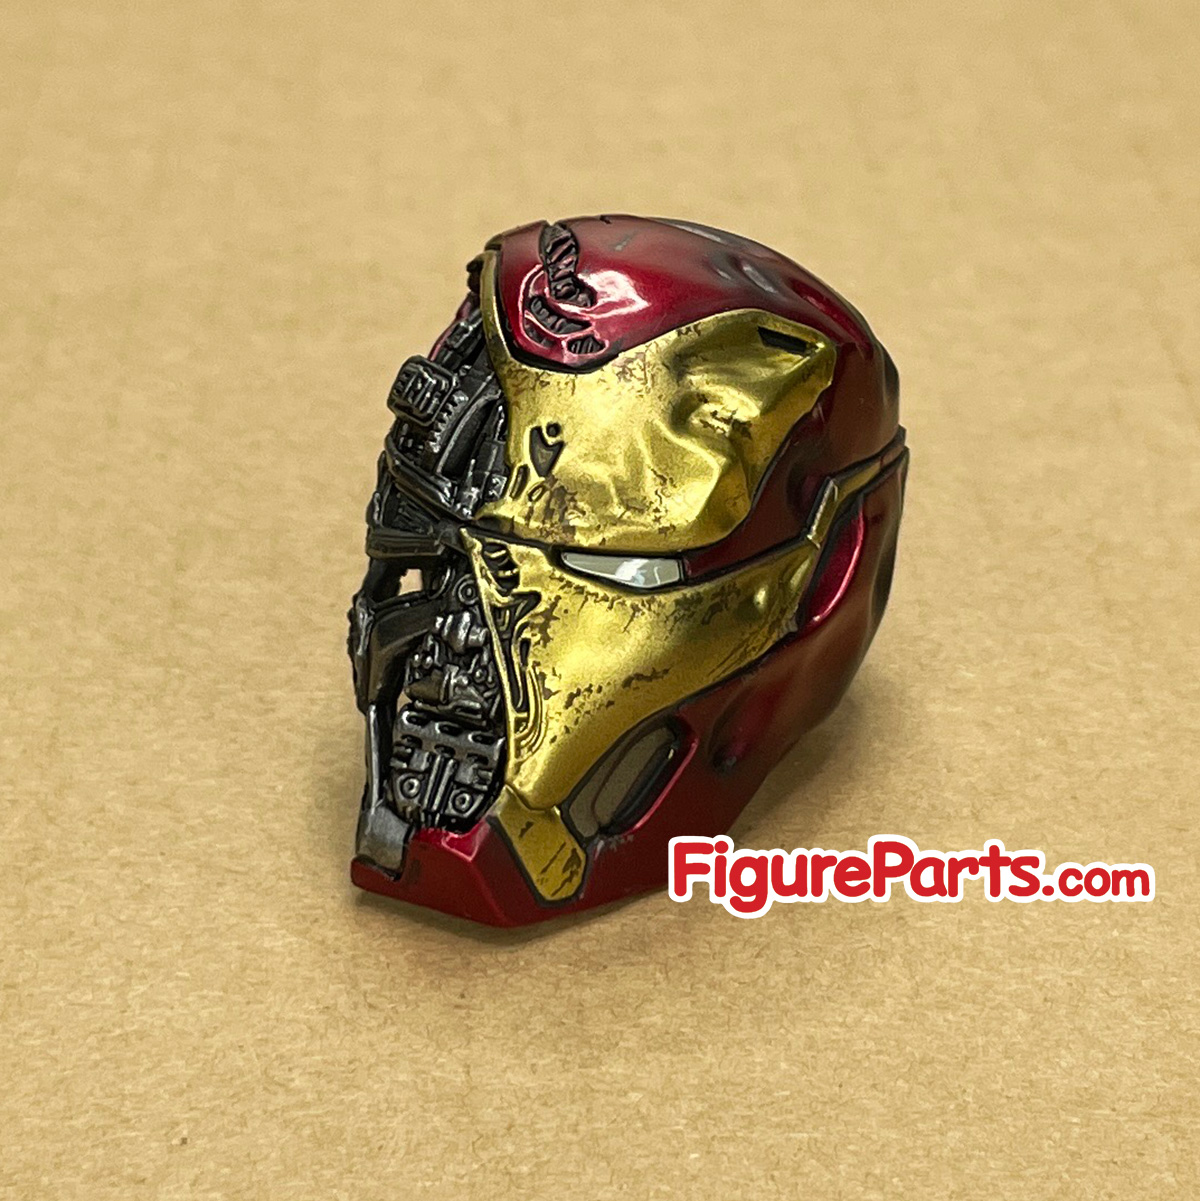 Damaged Iron Man Mark L Head  - Tony Stark Team Suit - Avengers Endgame - Hot Toys mms537 2